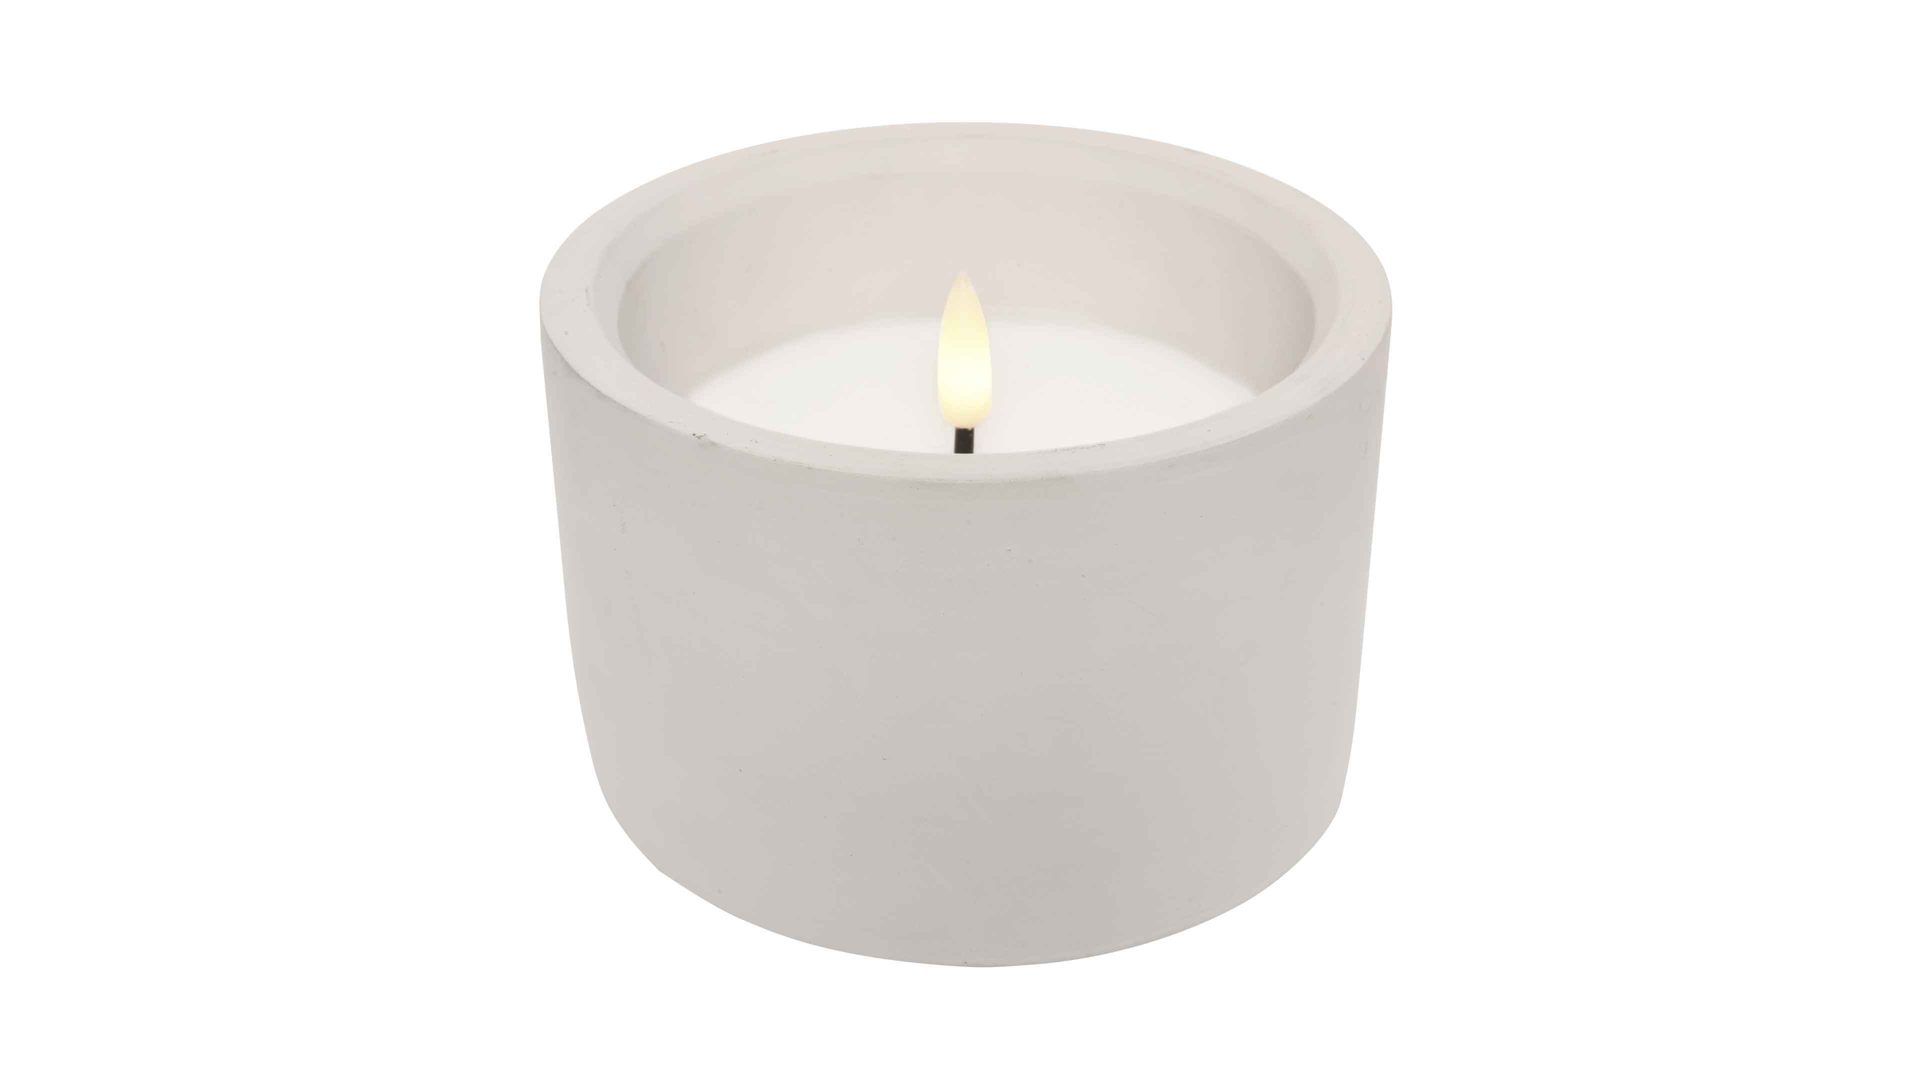 Kerze Kaemingk aus Wachs in Weiß LED Outdoor-Kerze Wachs & Beton - eine Flamme